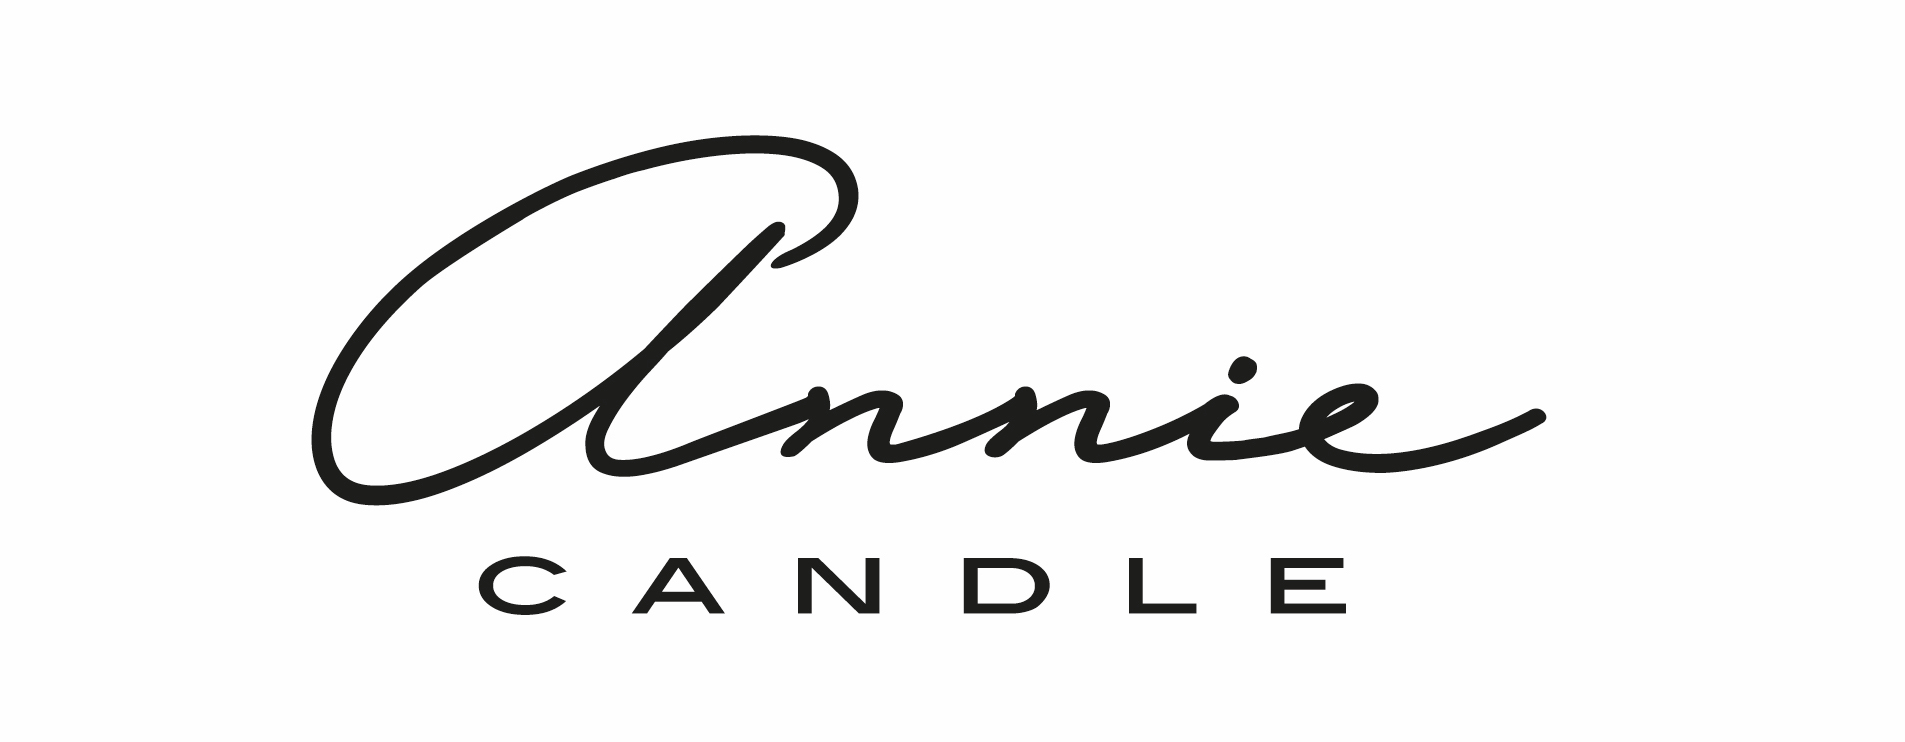 Annie candle